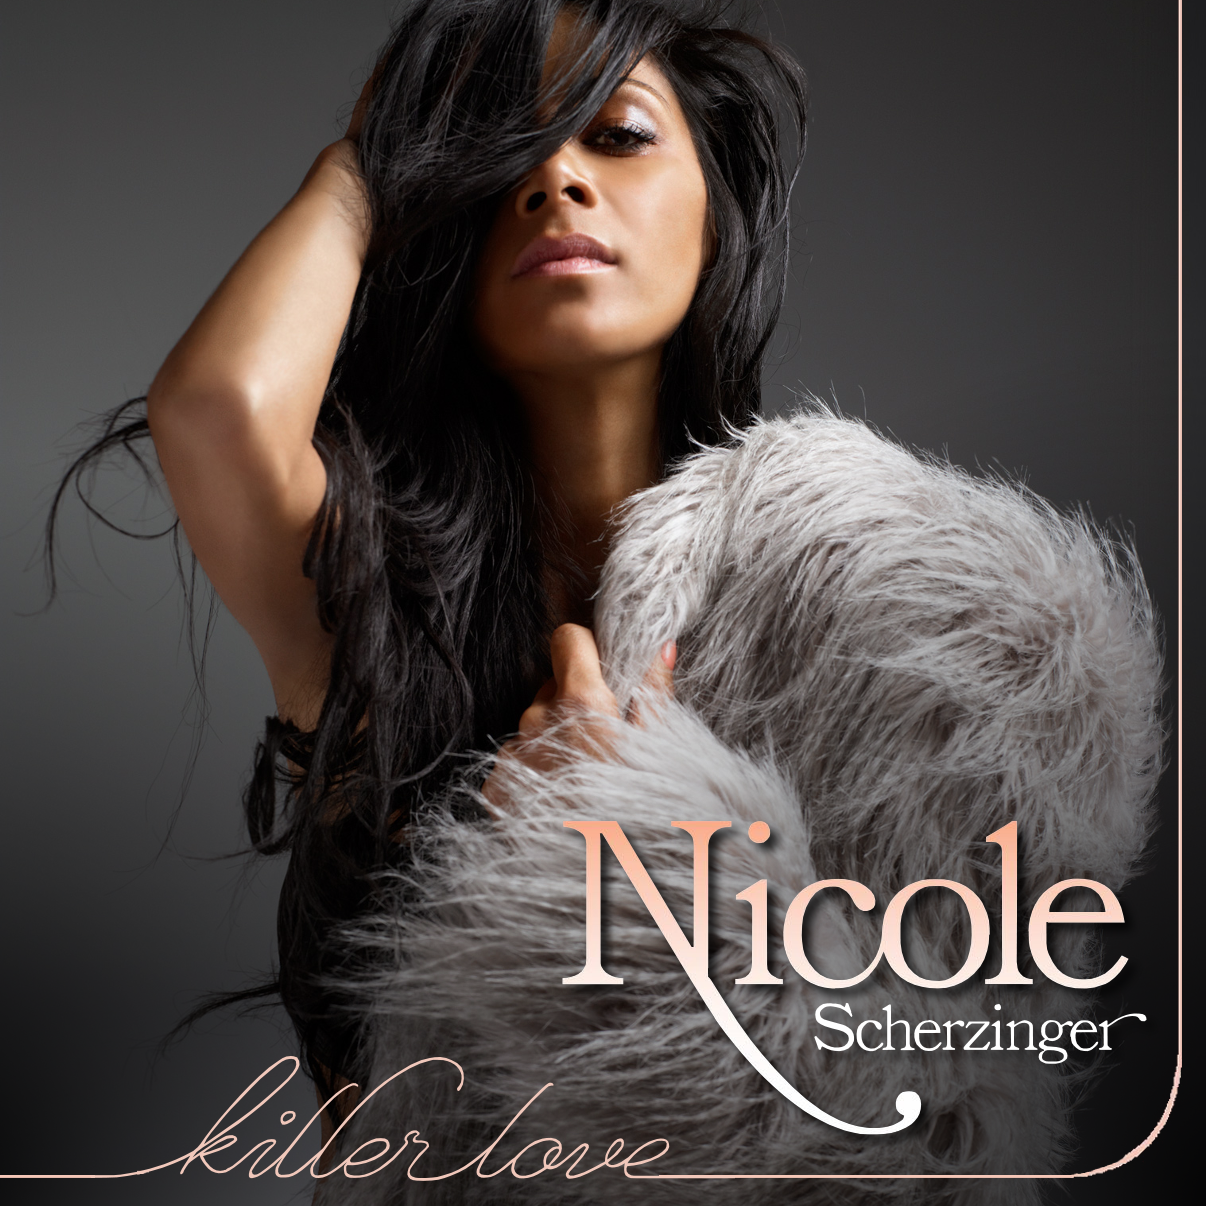 Album Cover: Nicole Scherzinger - Killer Love.